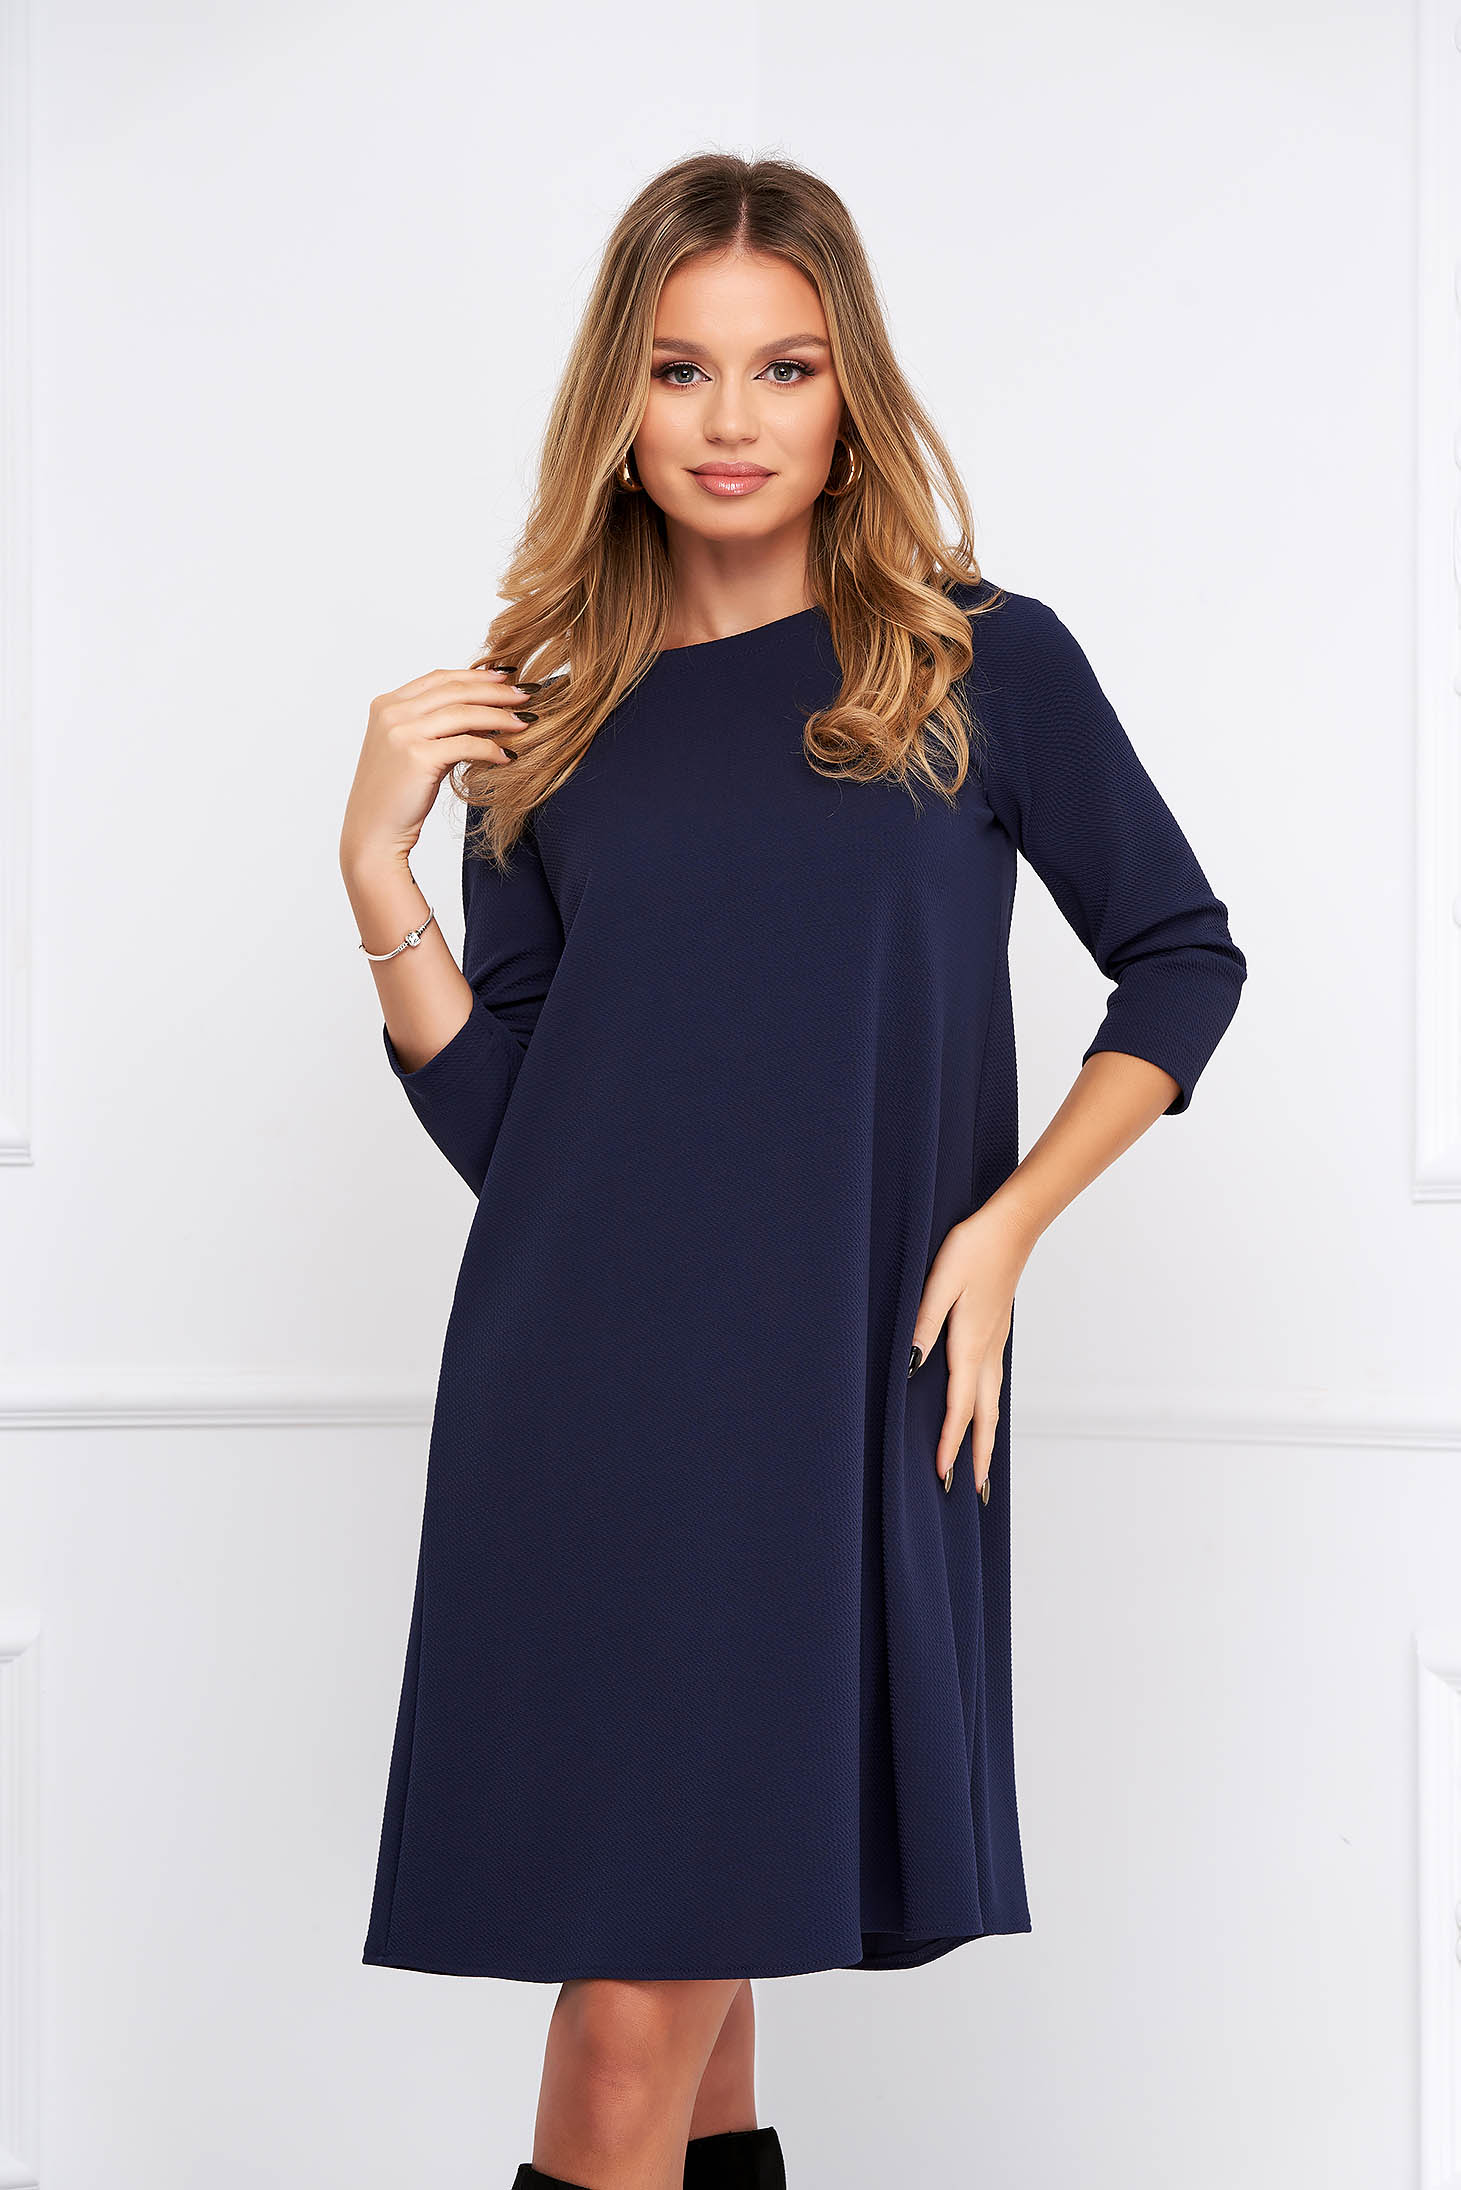 - StarShinerS darkblue dress short cut loose fit from elastic fabric